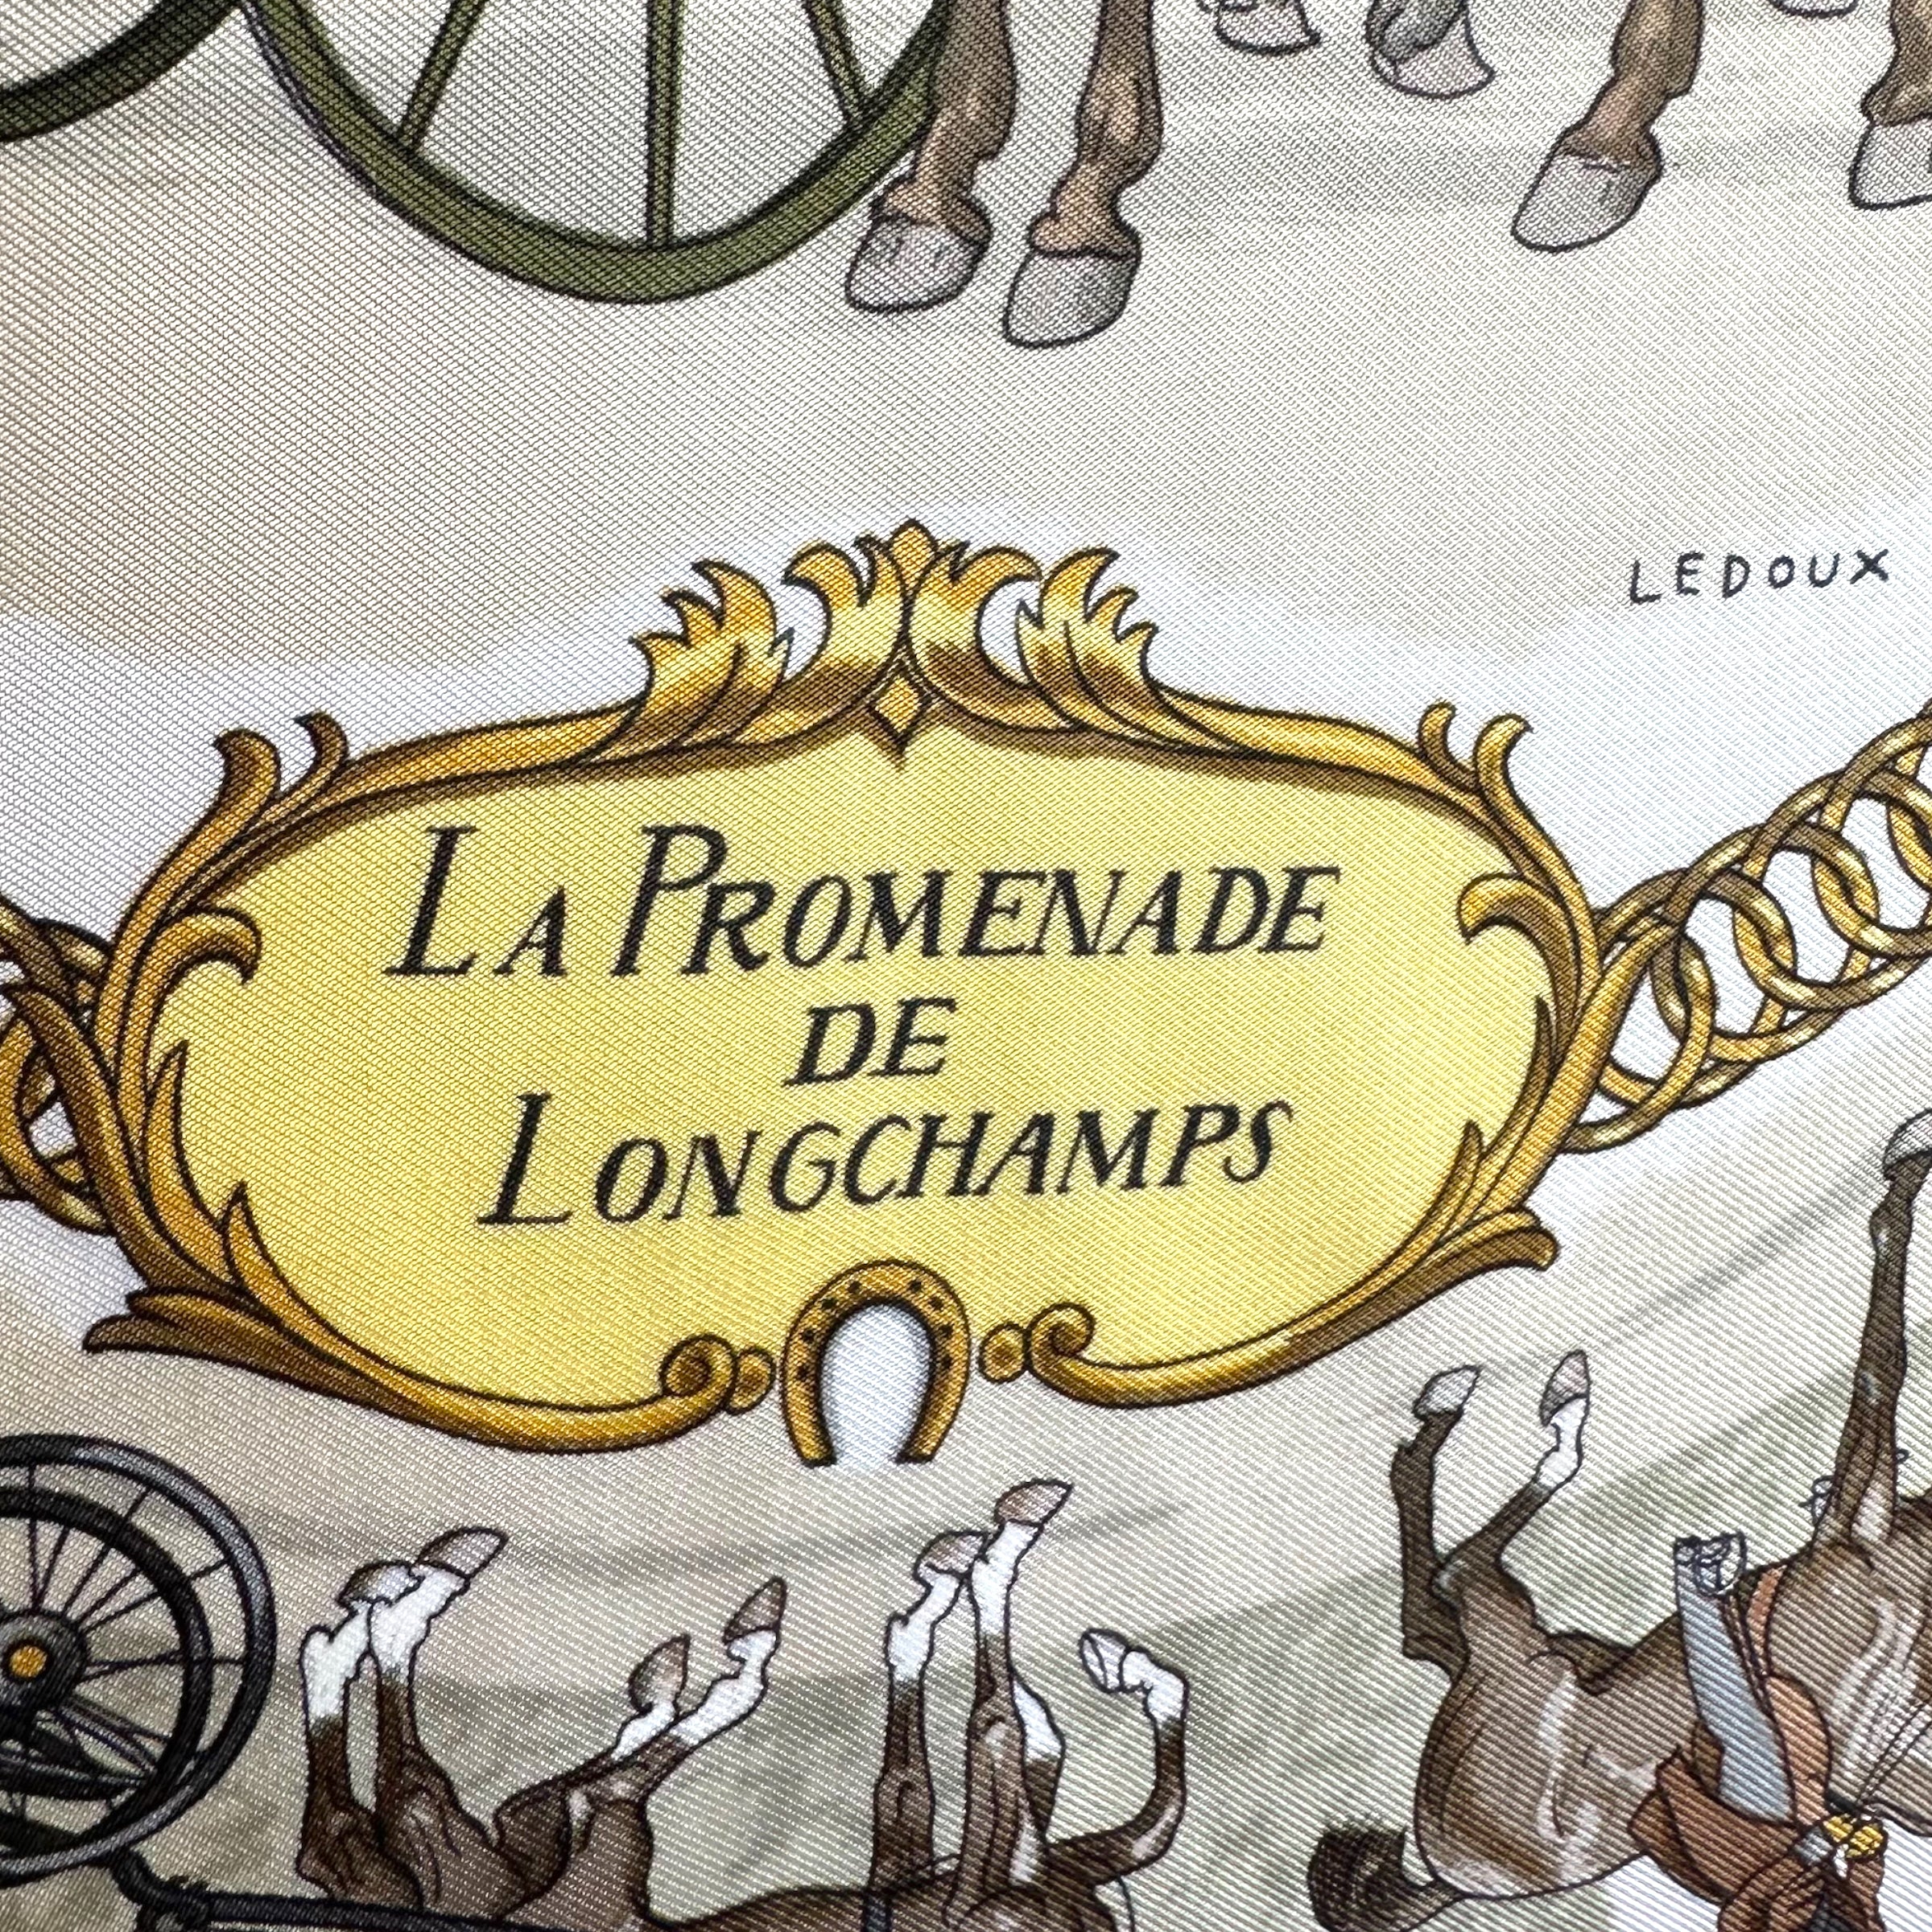 La Promenade de Longchamps - FOULARD HERMES 90 cm